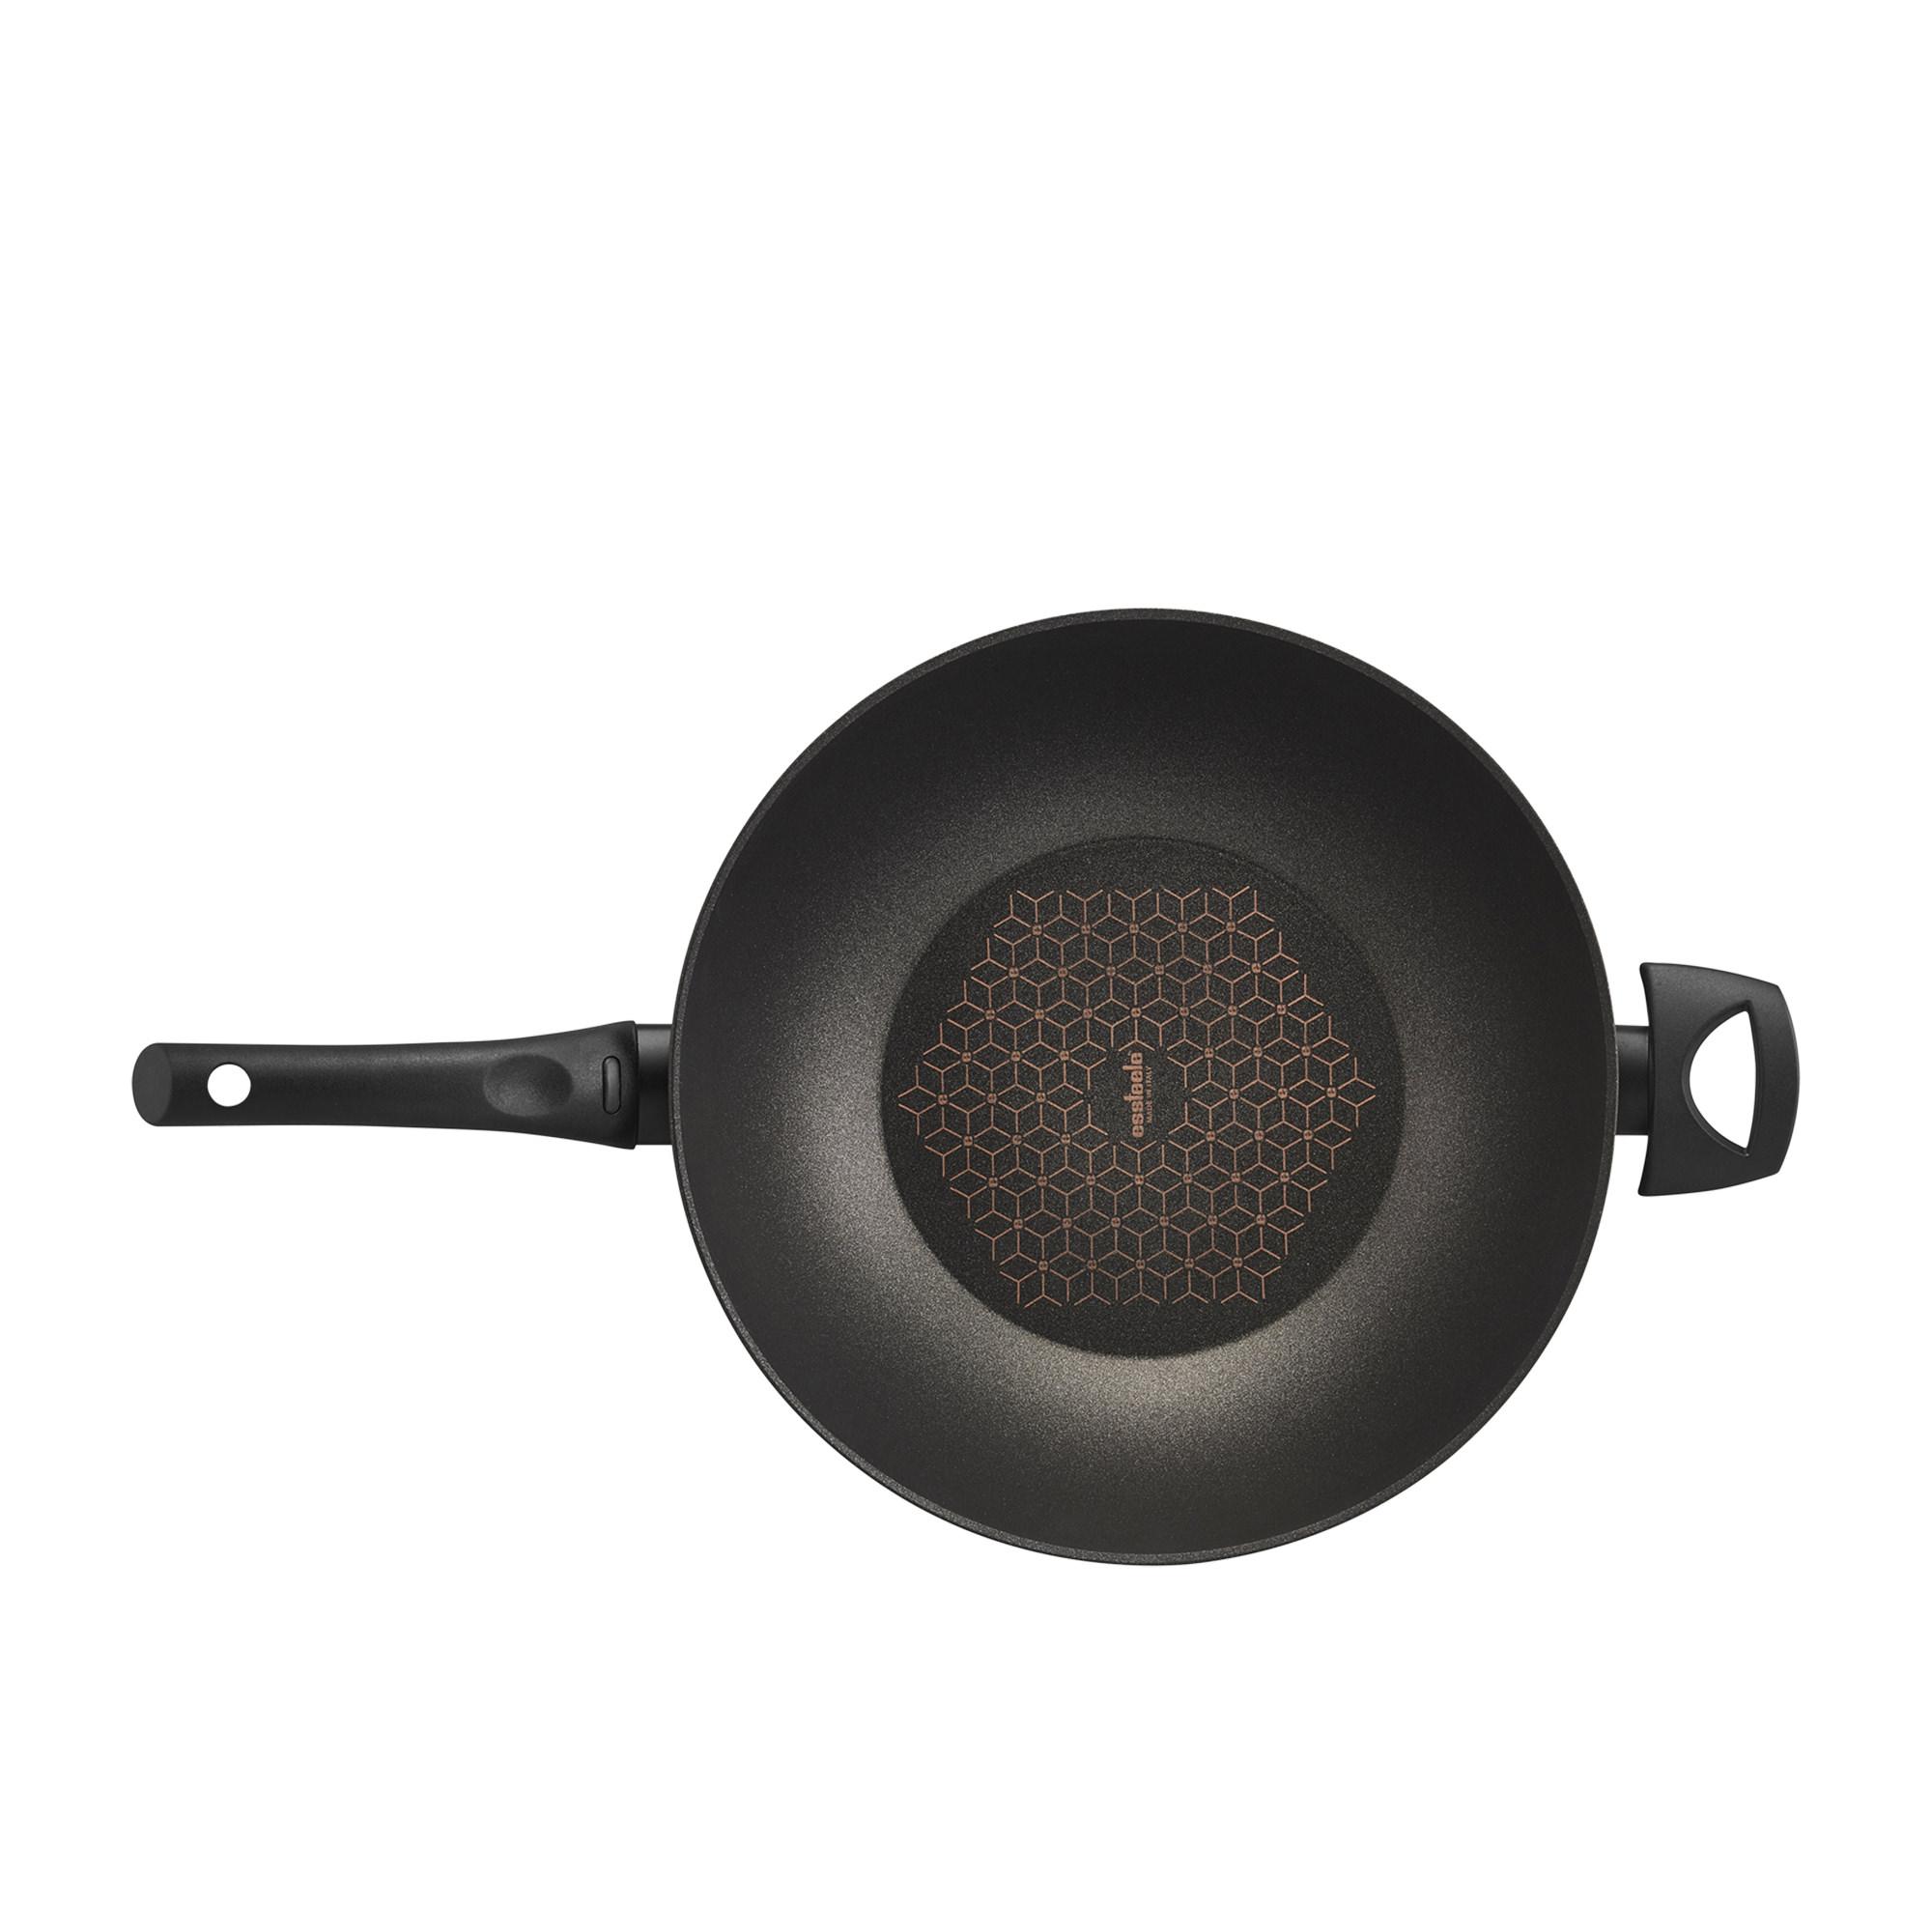 Essteele Per Salute Stirfry Pan with Lid 32cm Image 4